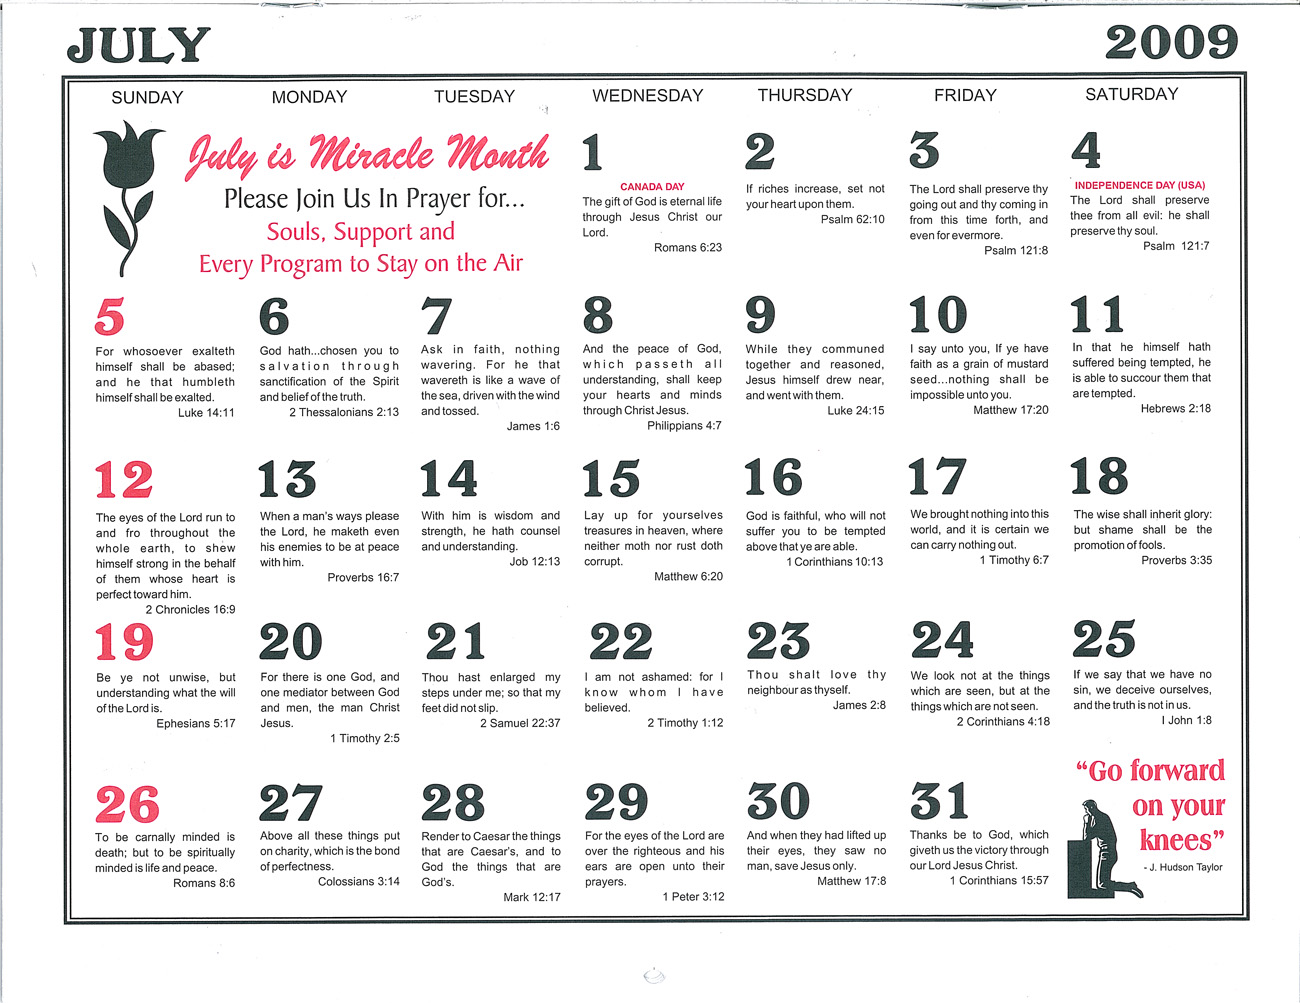 July: 2009 Daily Bible Text Calendar